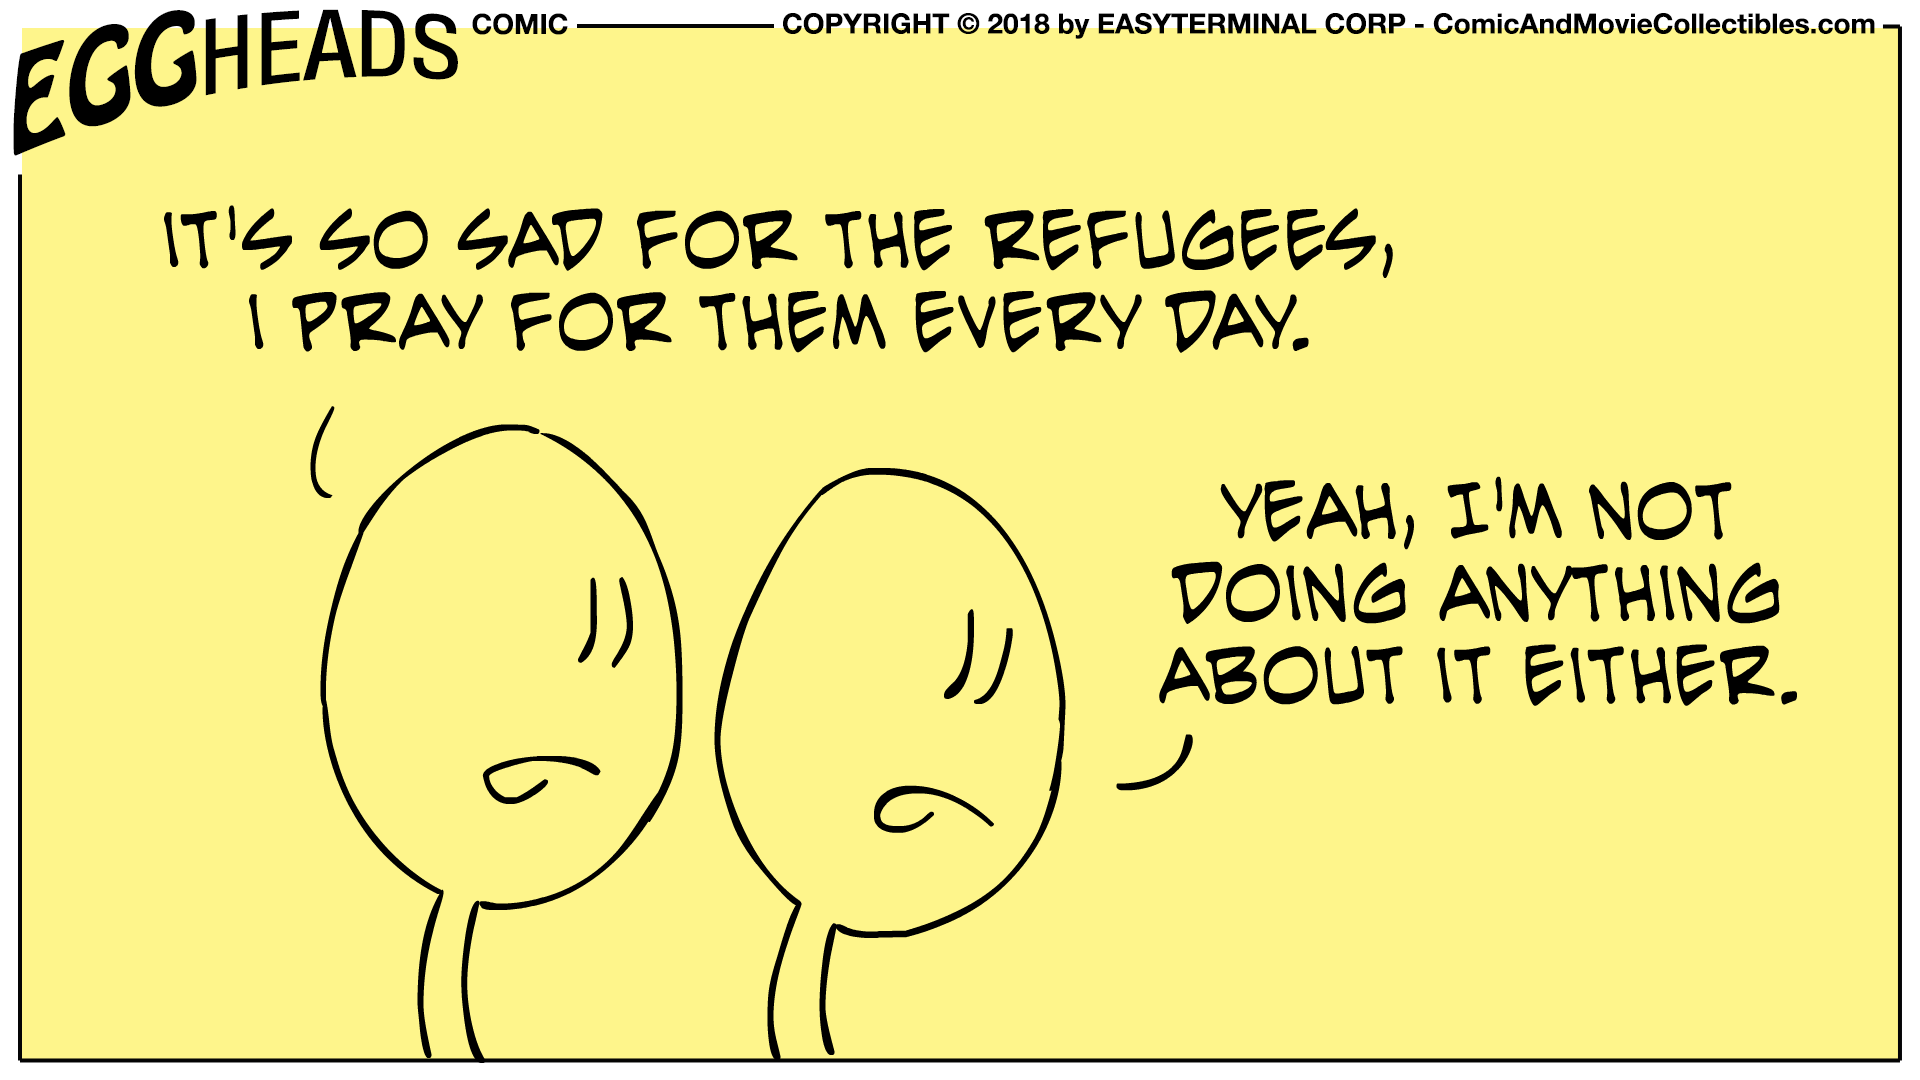 Webcomic Eggheads Comic Strip 025 The Refugees